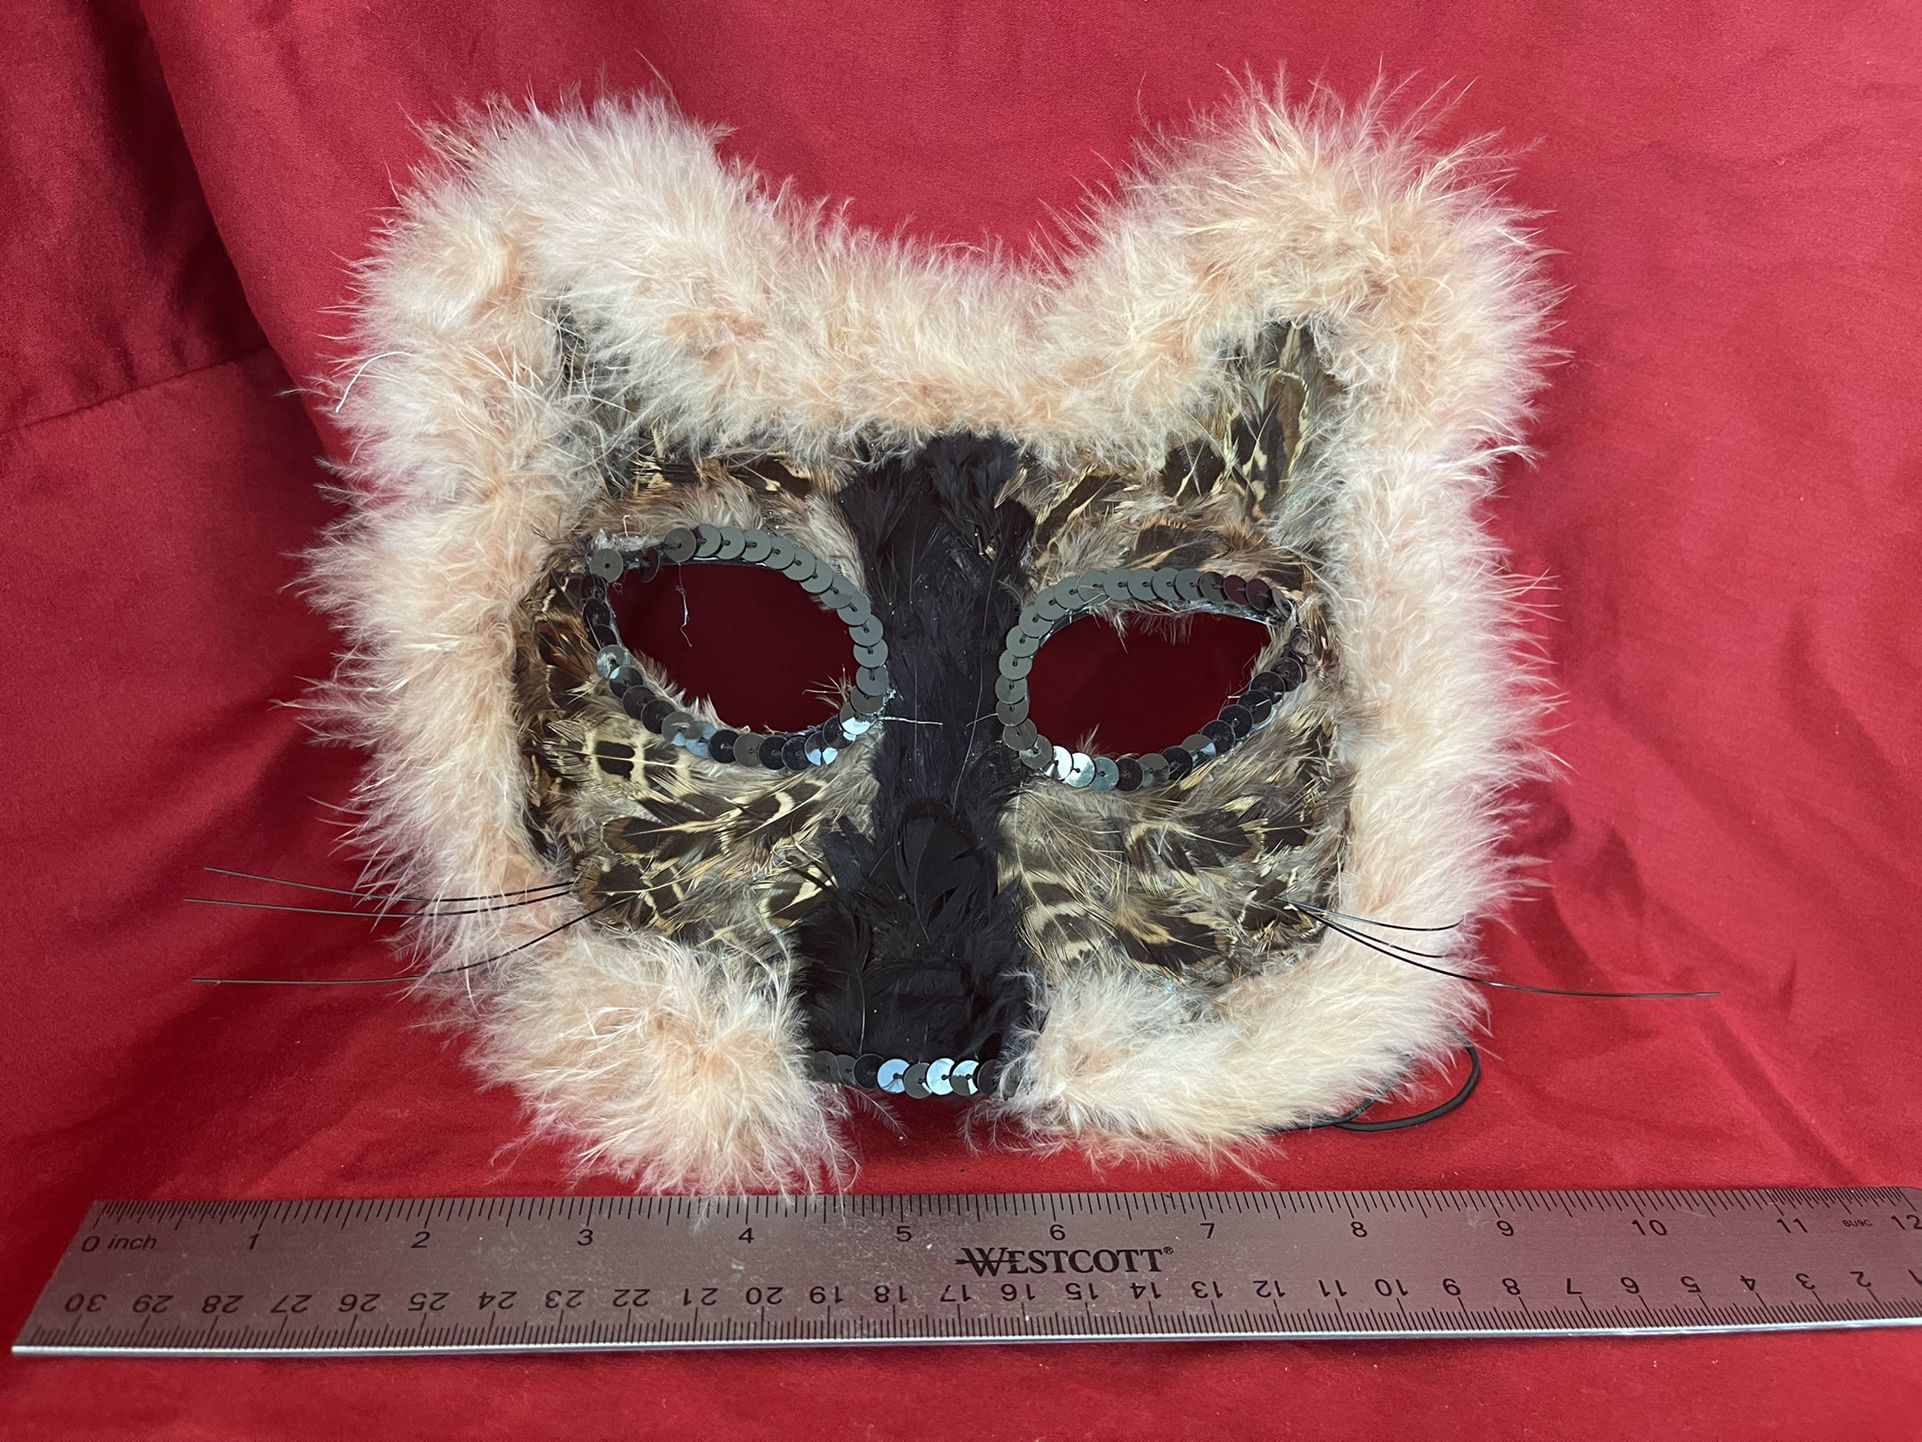 Feline Feathered Mask or Costume